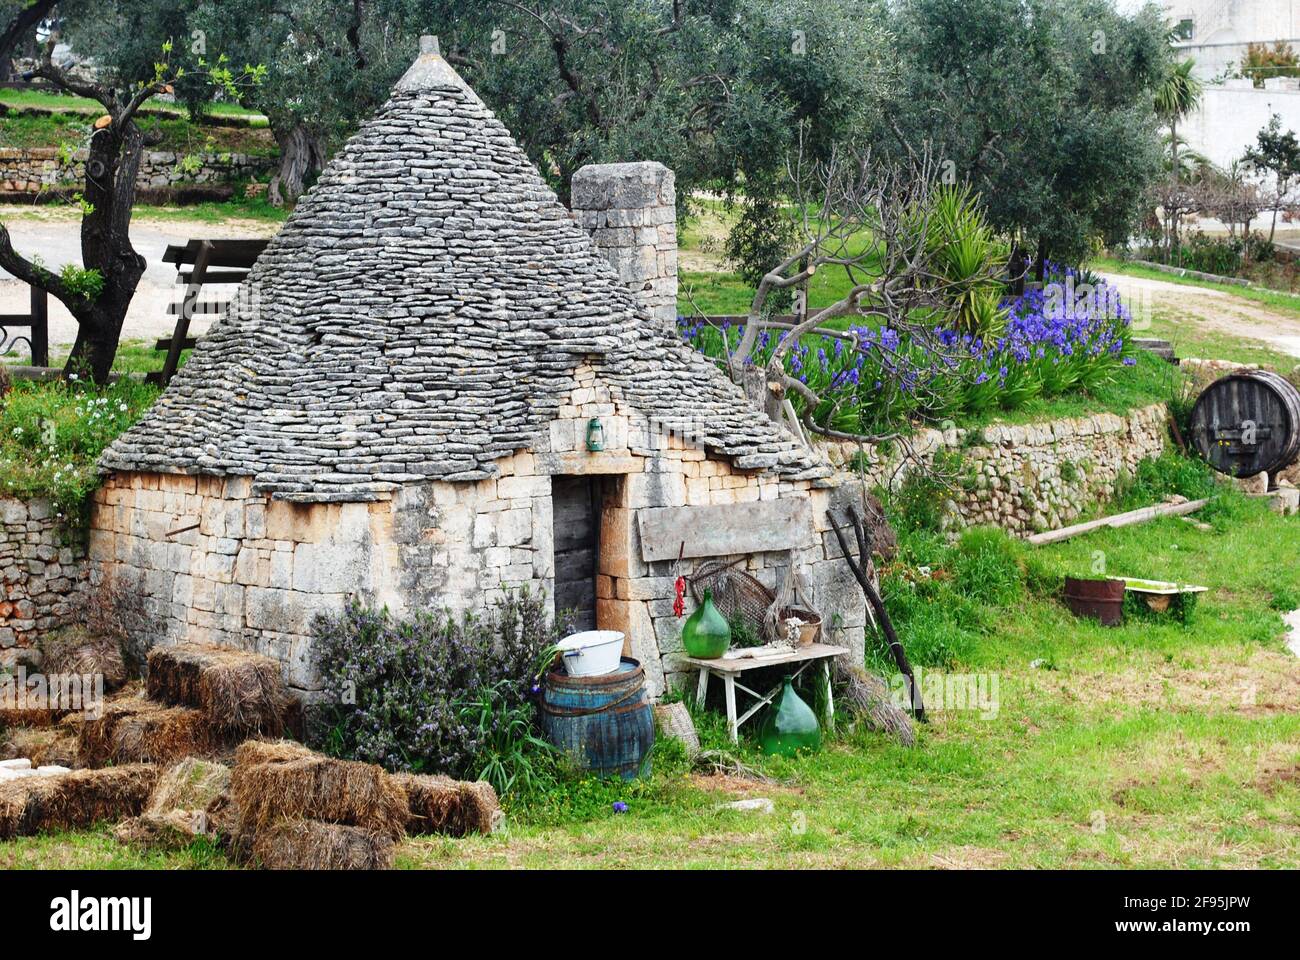 A Trullo traditional, stone, conical house in Alberobello, Bari, Italy. Alberobello is a town in Italy’s Apulia region known for its trulli. Stock Photo